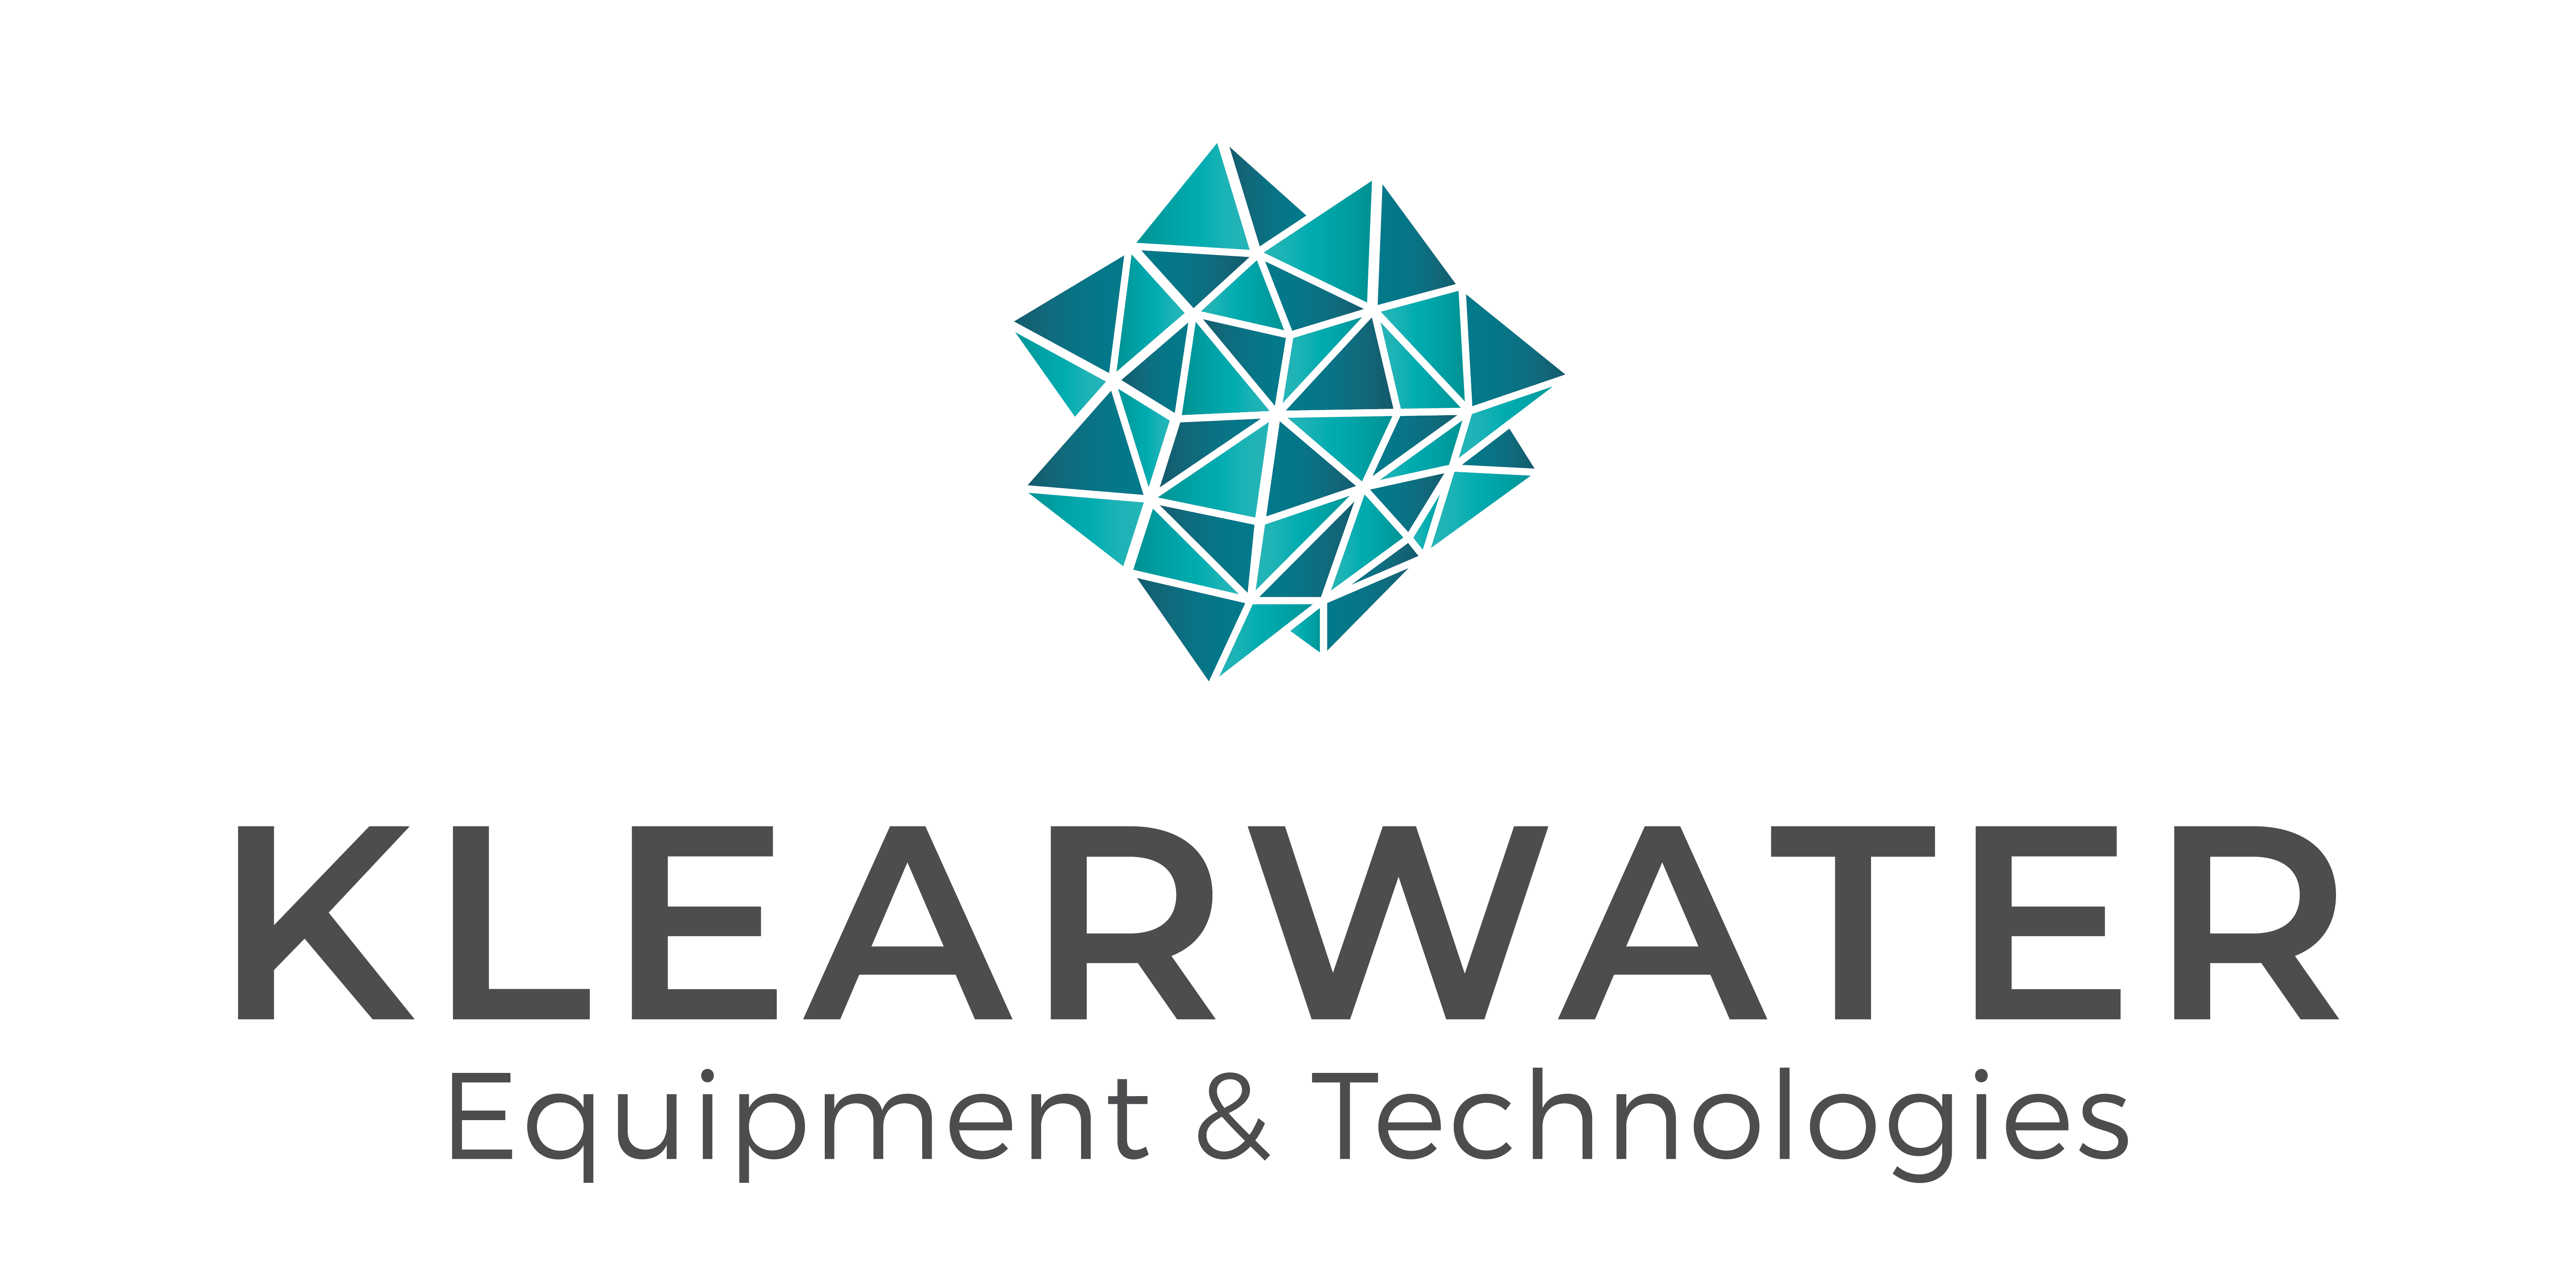 Klearwater Equipment & Technologies